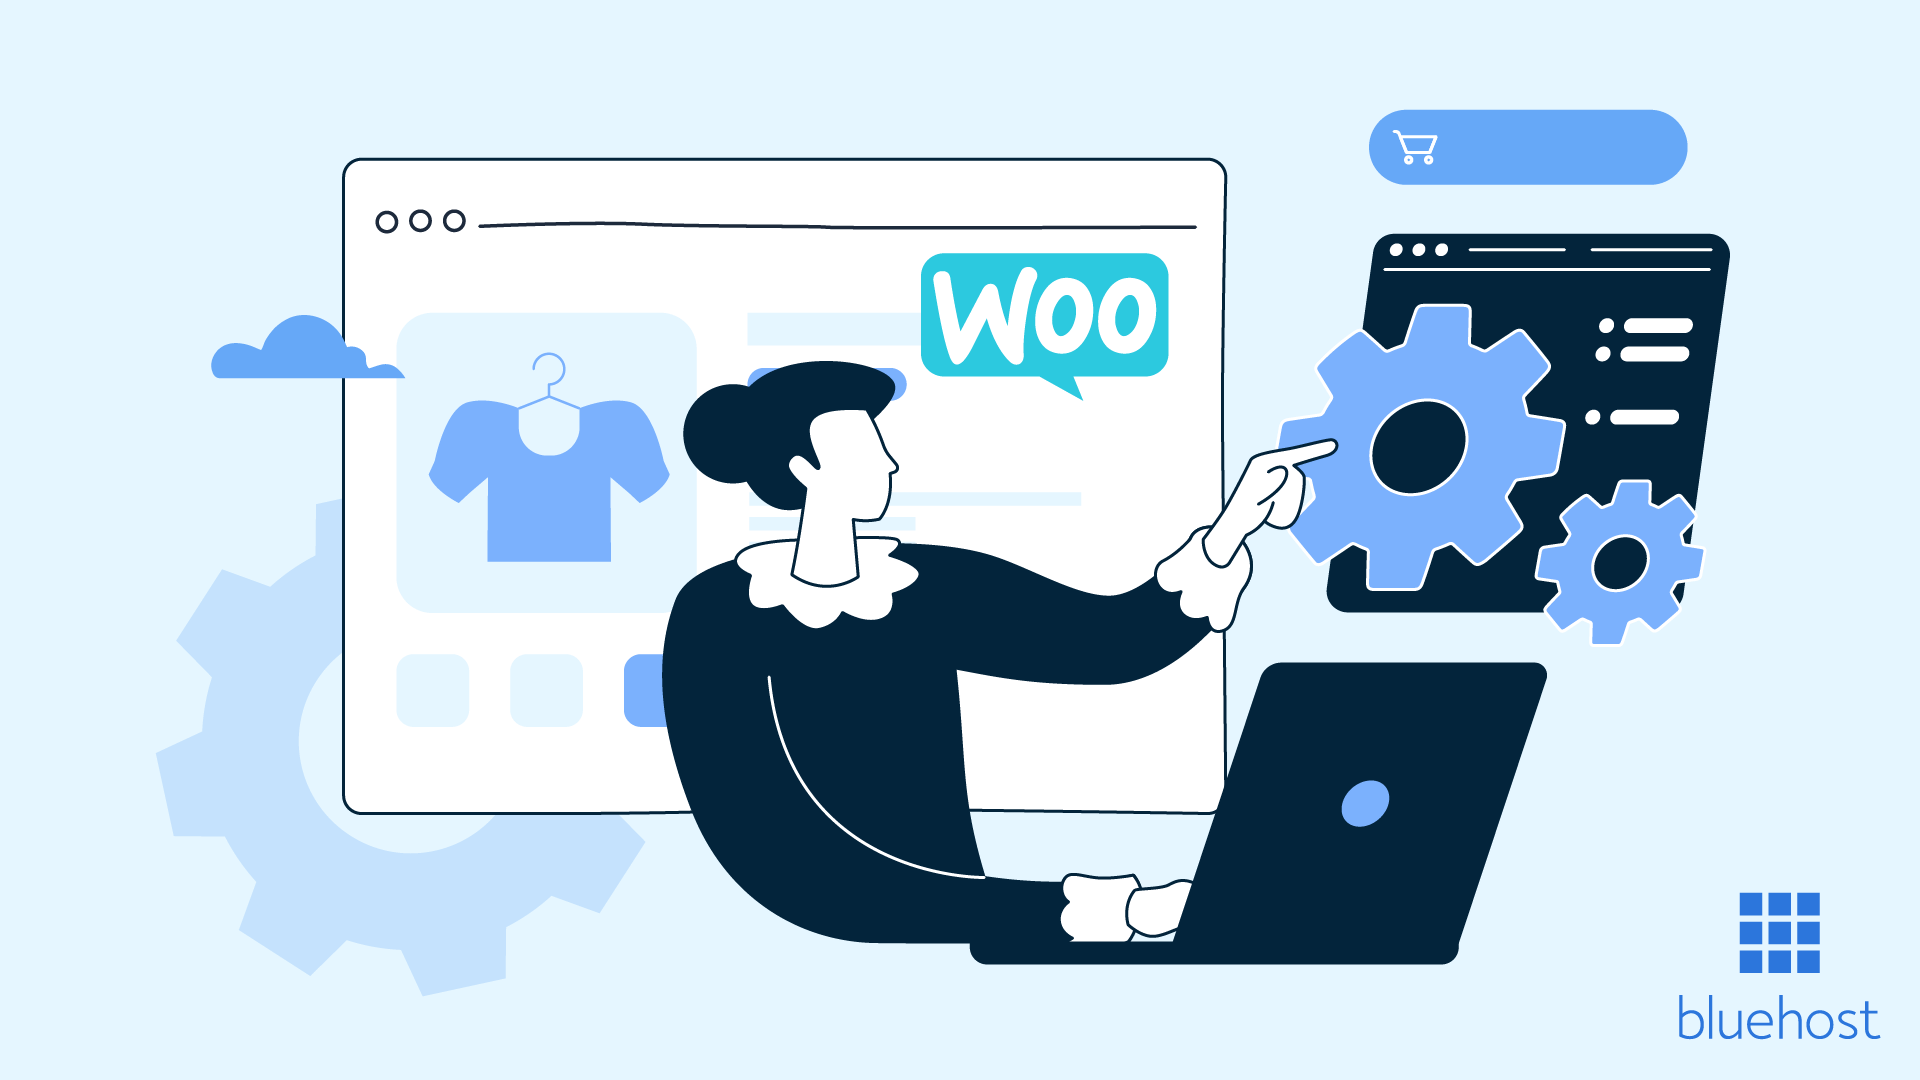 WooCommerce Checkout Fields Customization Guide